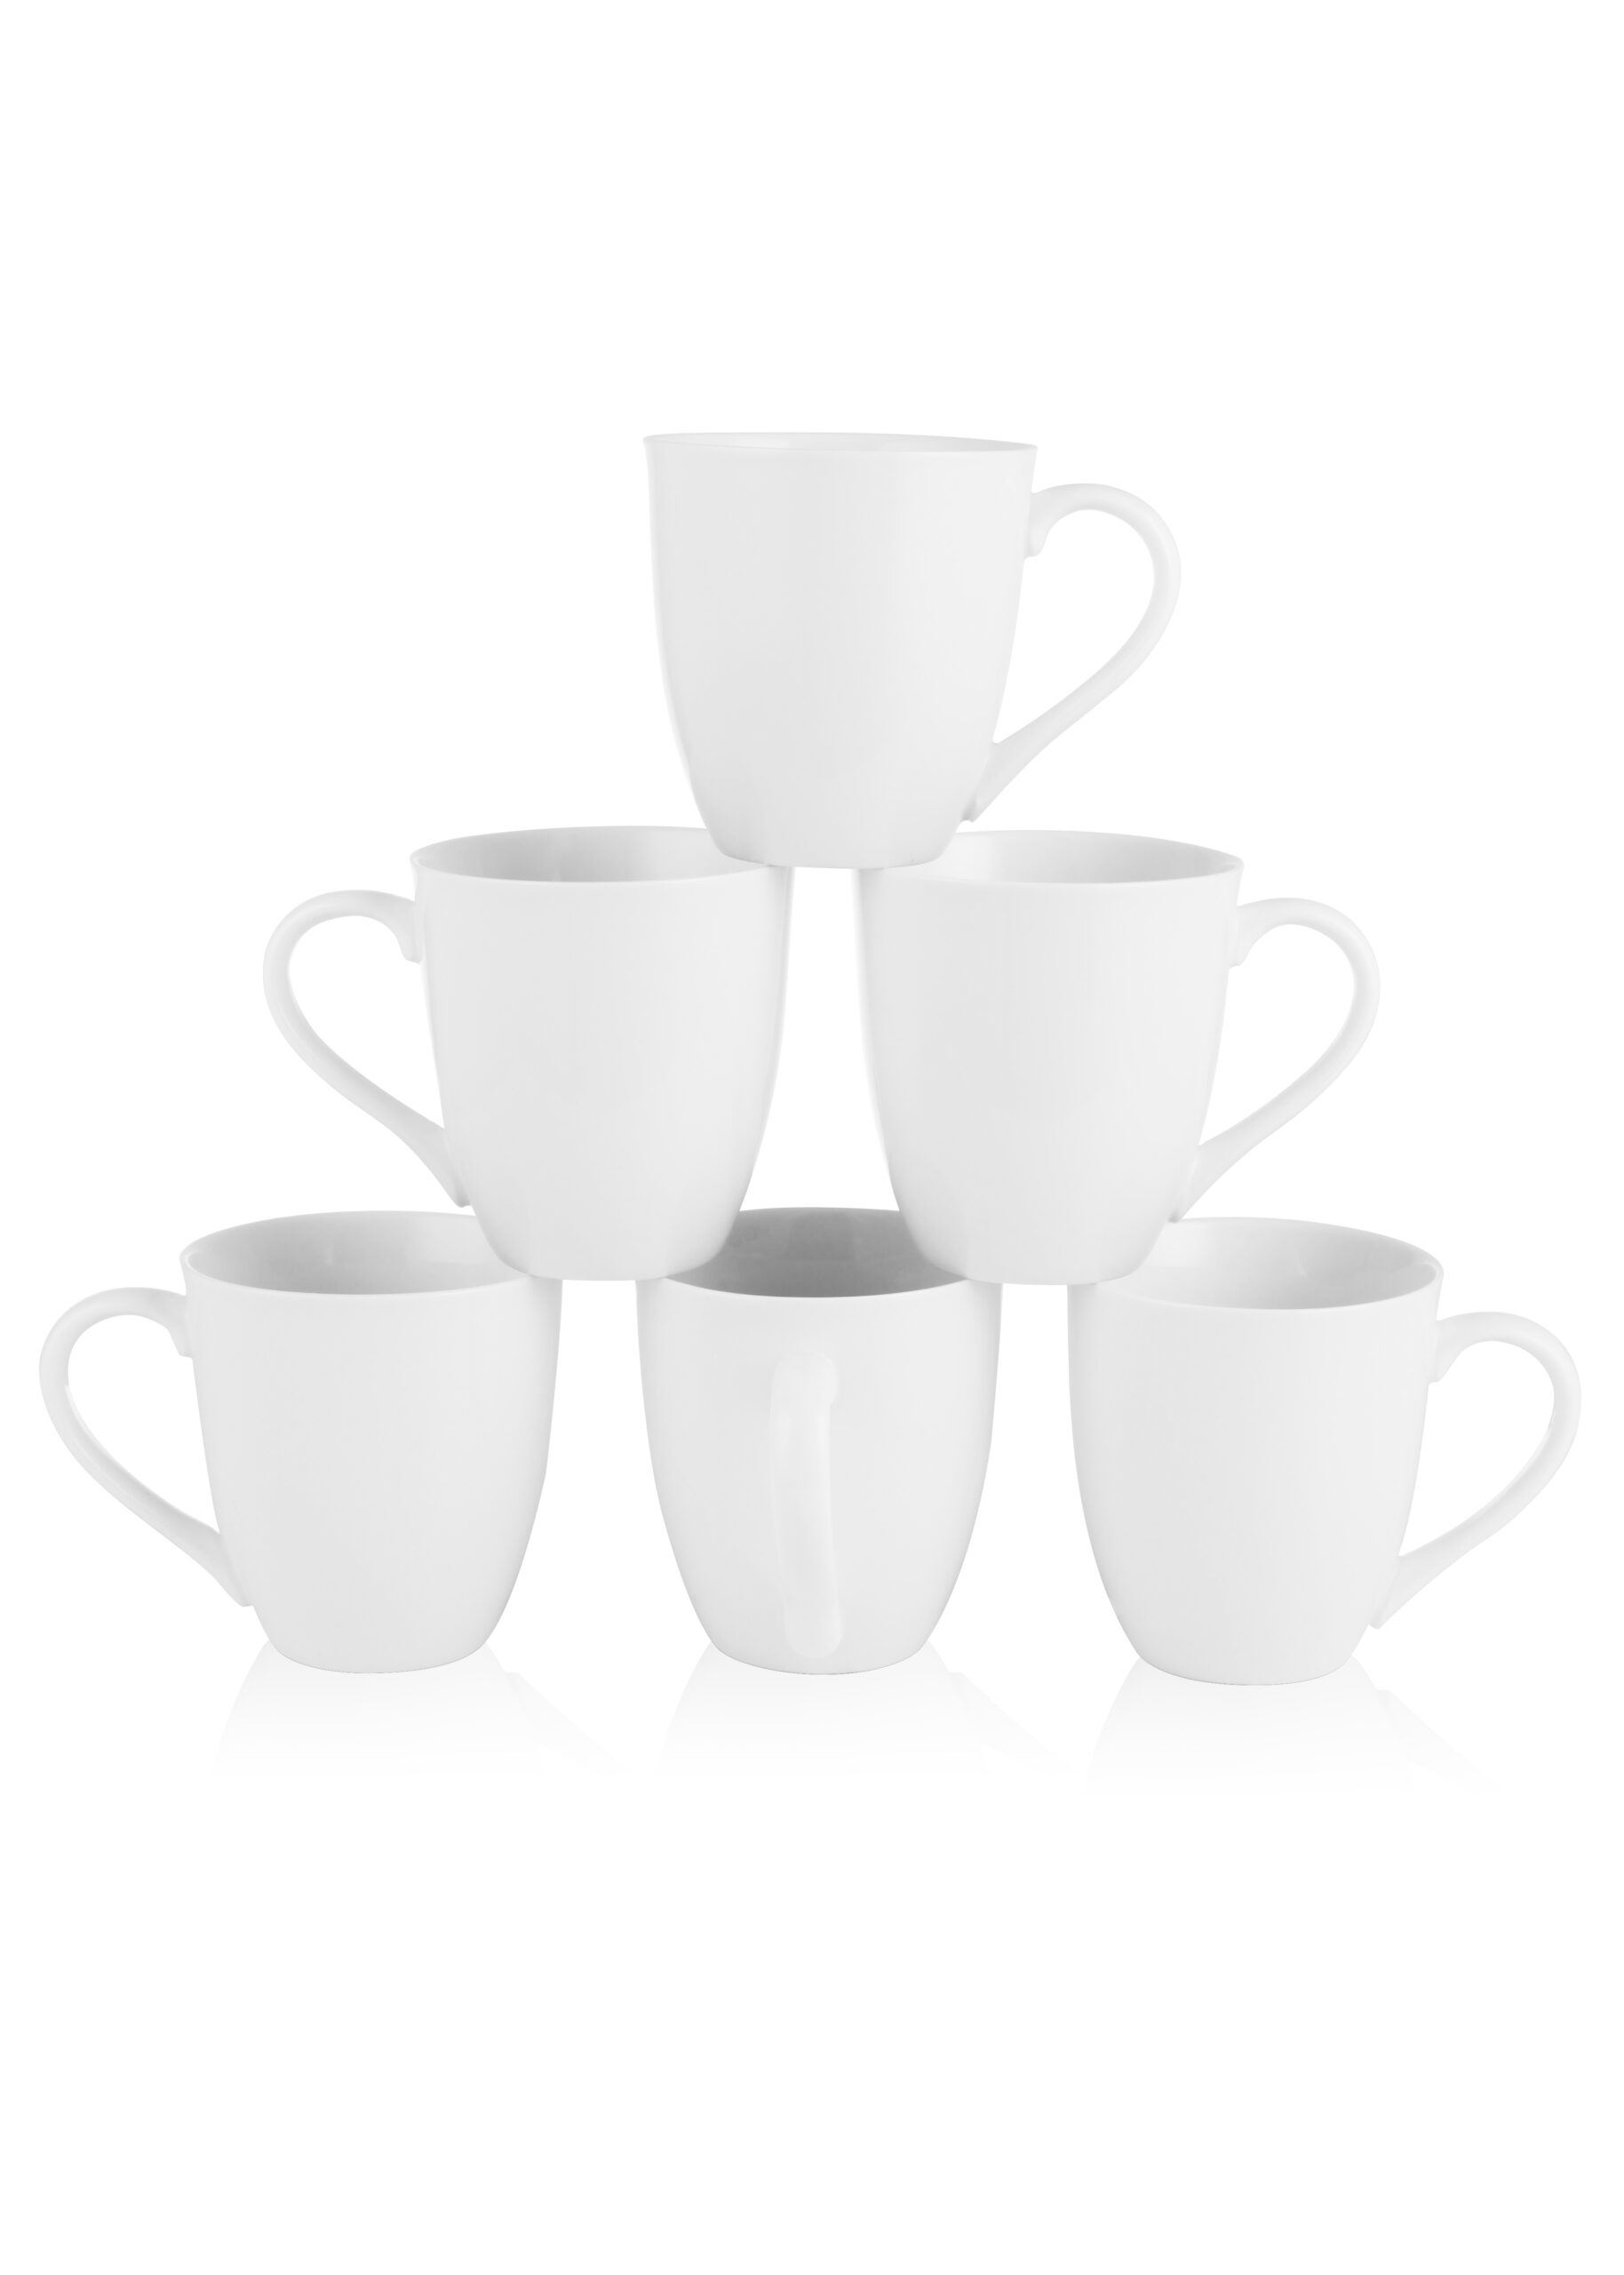 Set Of 6 Coffee Mug Sets, 16 Ounce Ceramic Coffee Mugs Restaurant Coffee Mug,  Large-sized Black Coffee Mugs Set Perfect For Coffee, Cappuccino, Tea, C